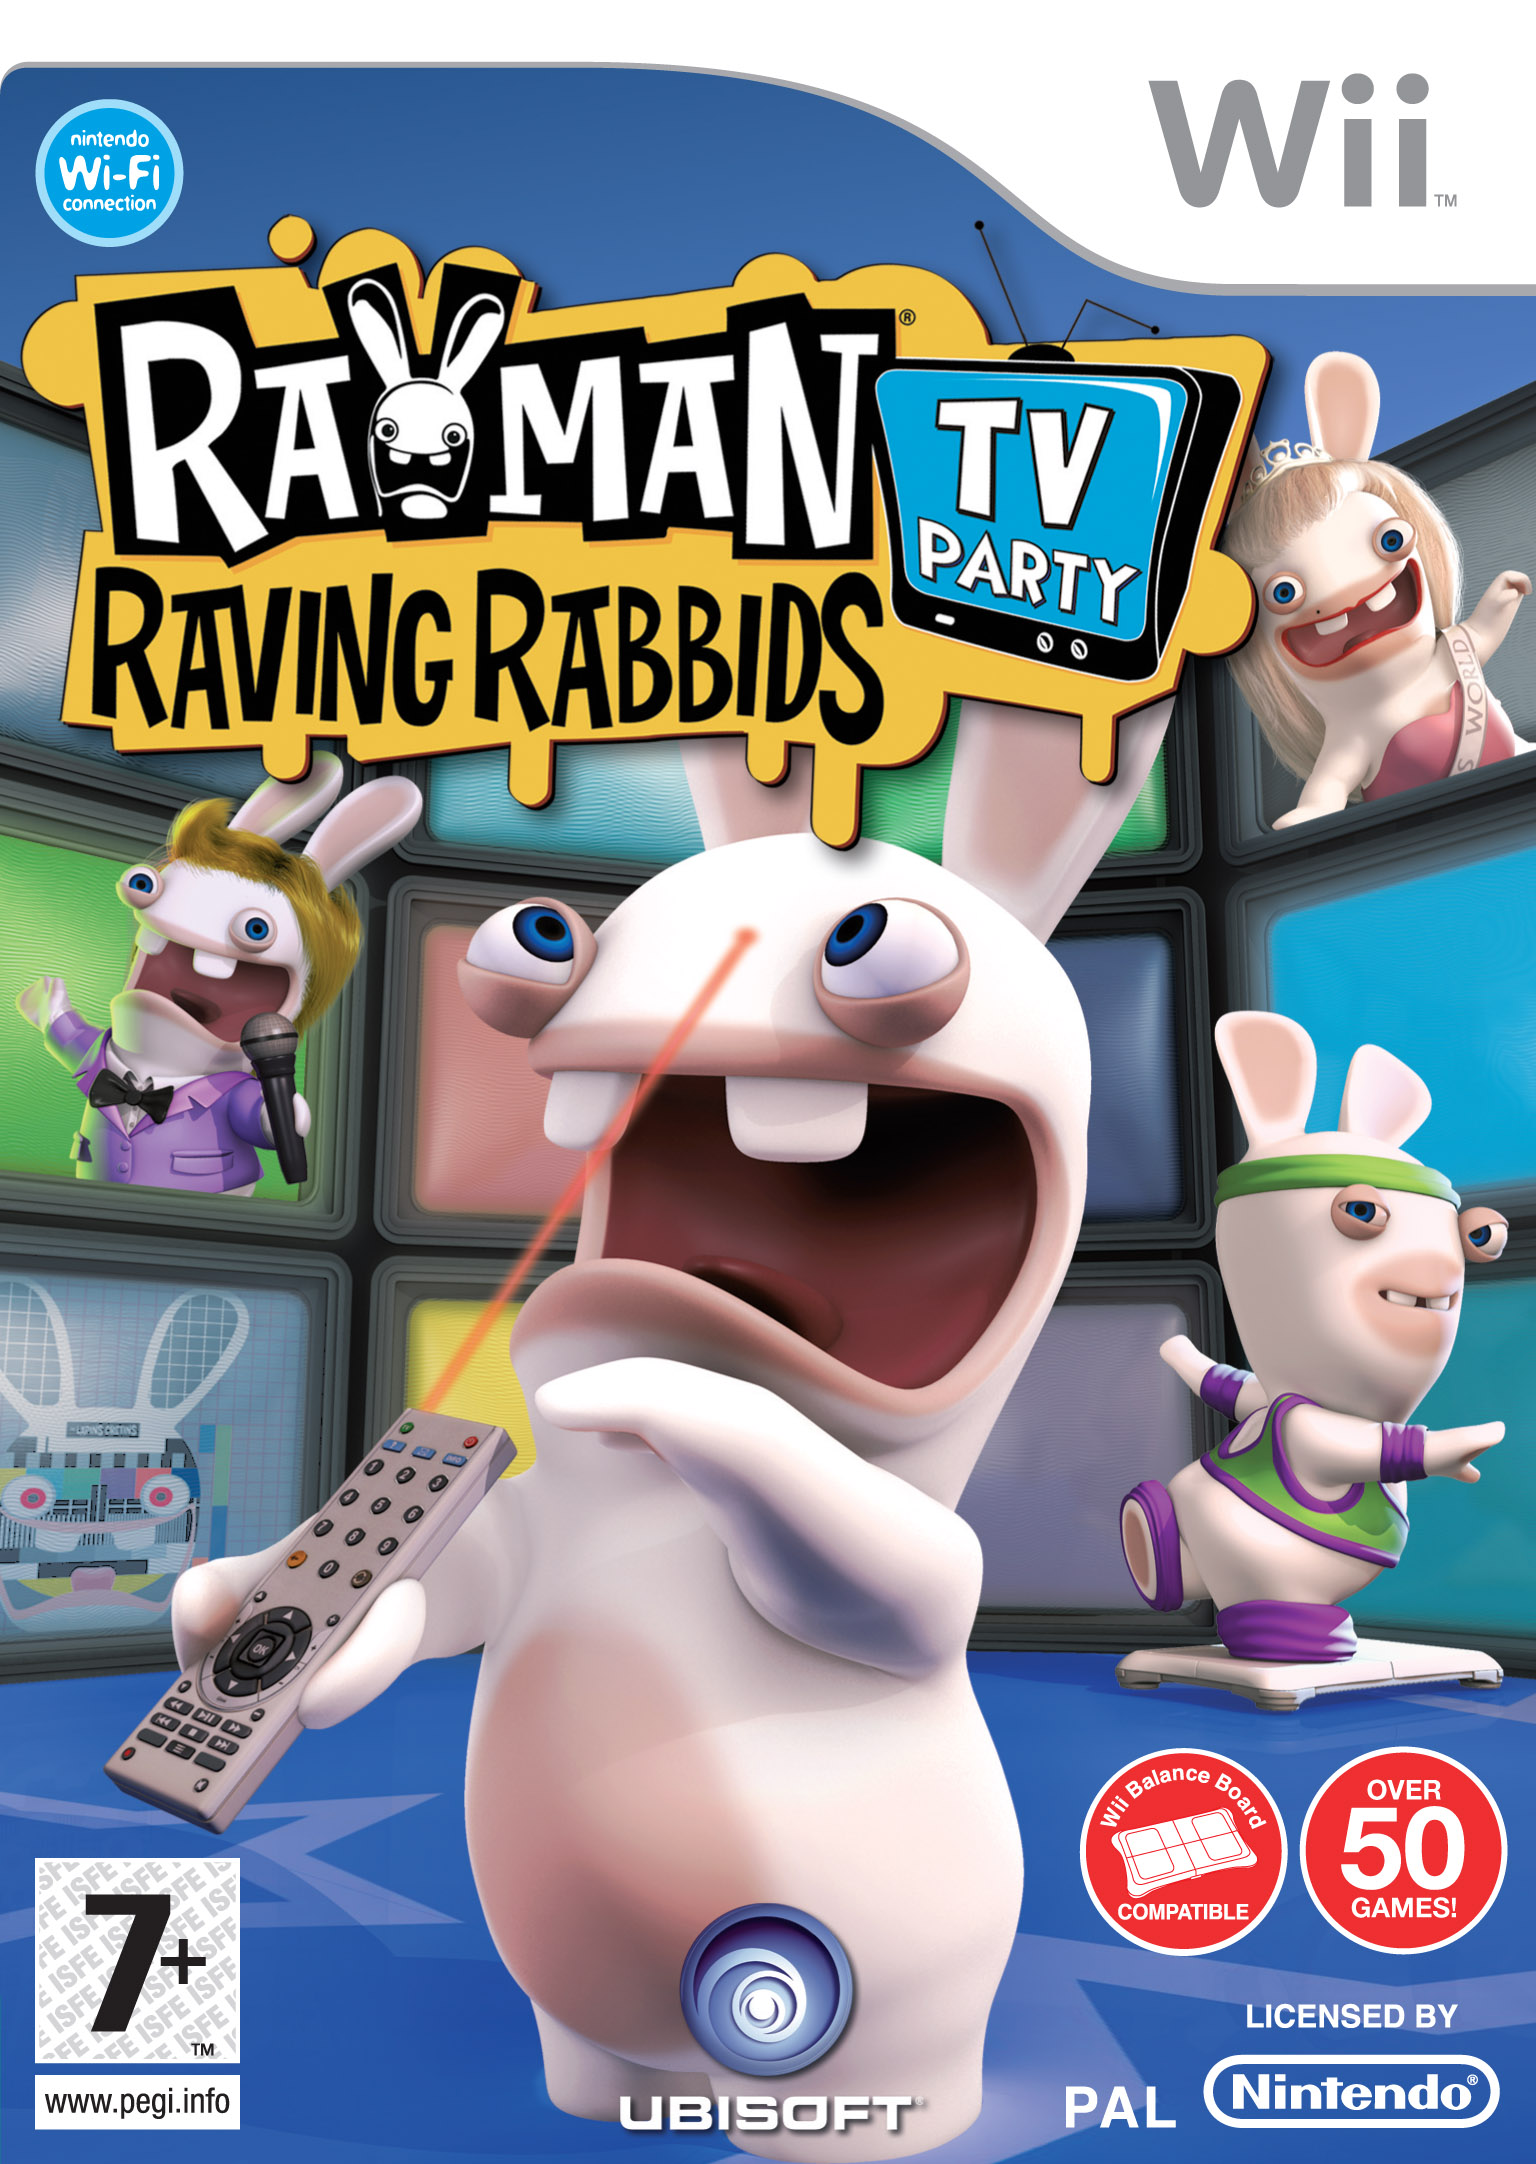 download rayman raving rabbids tv party